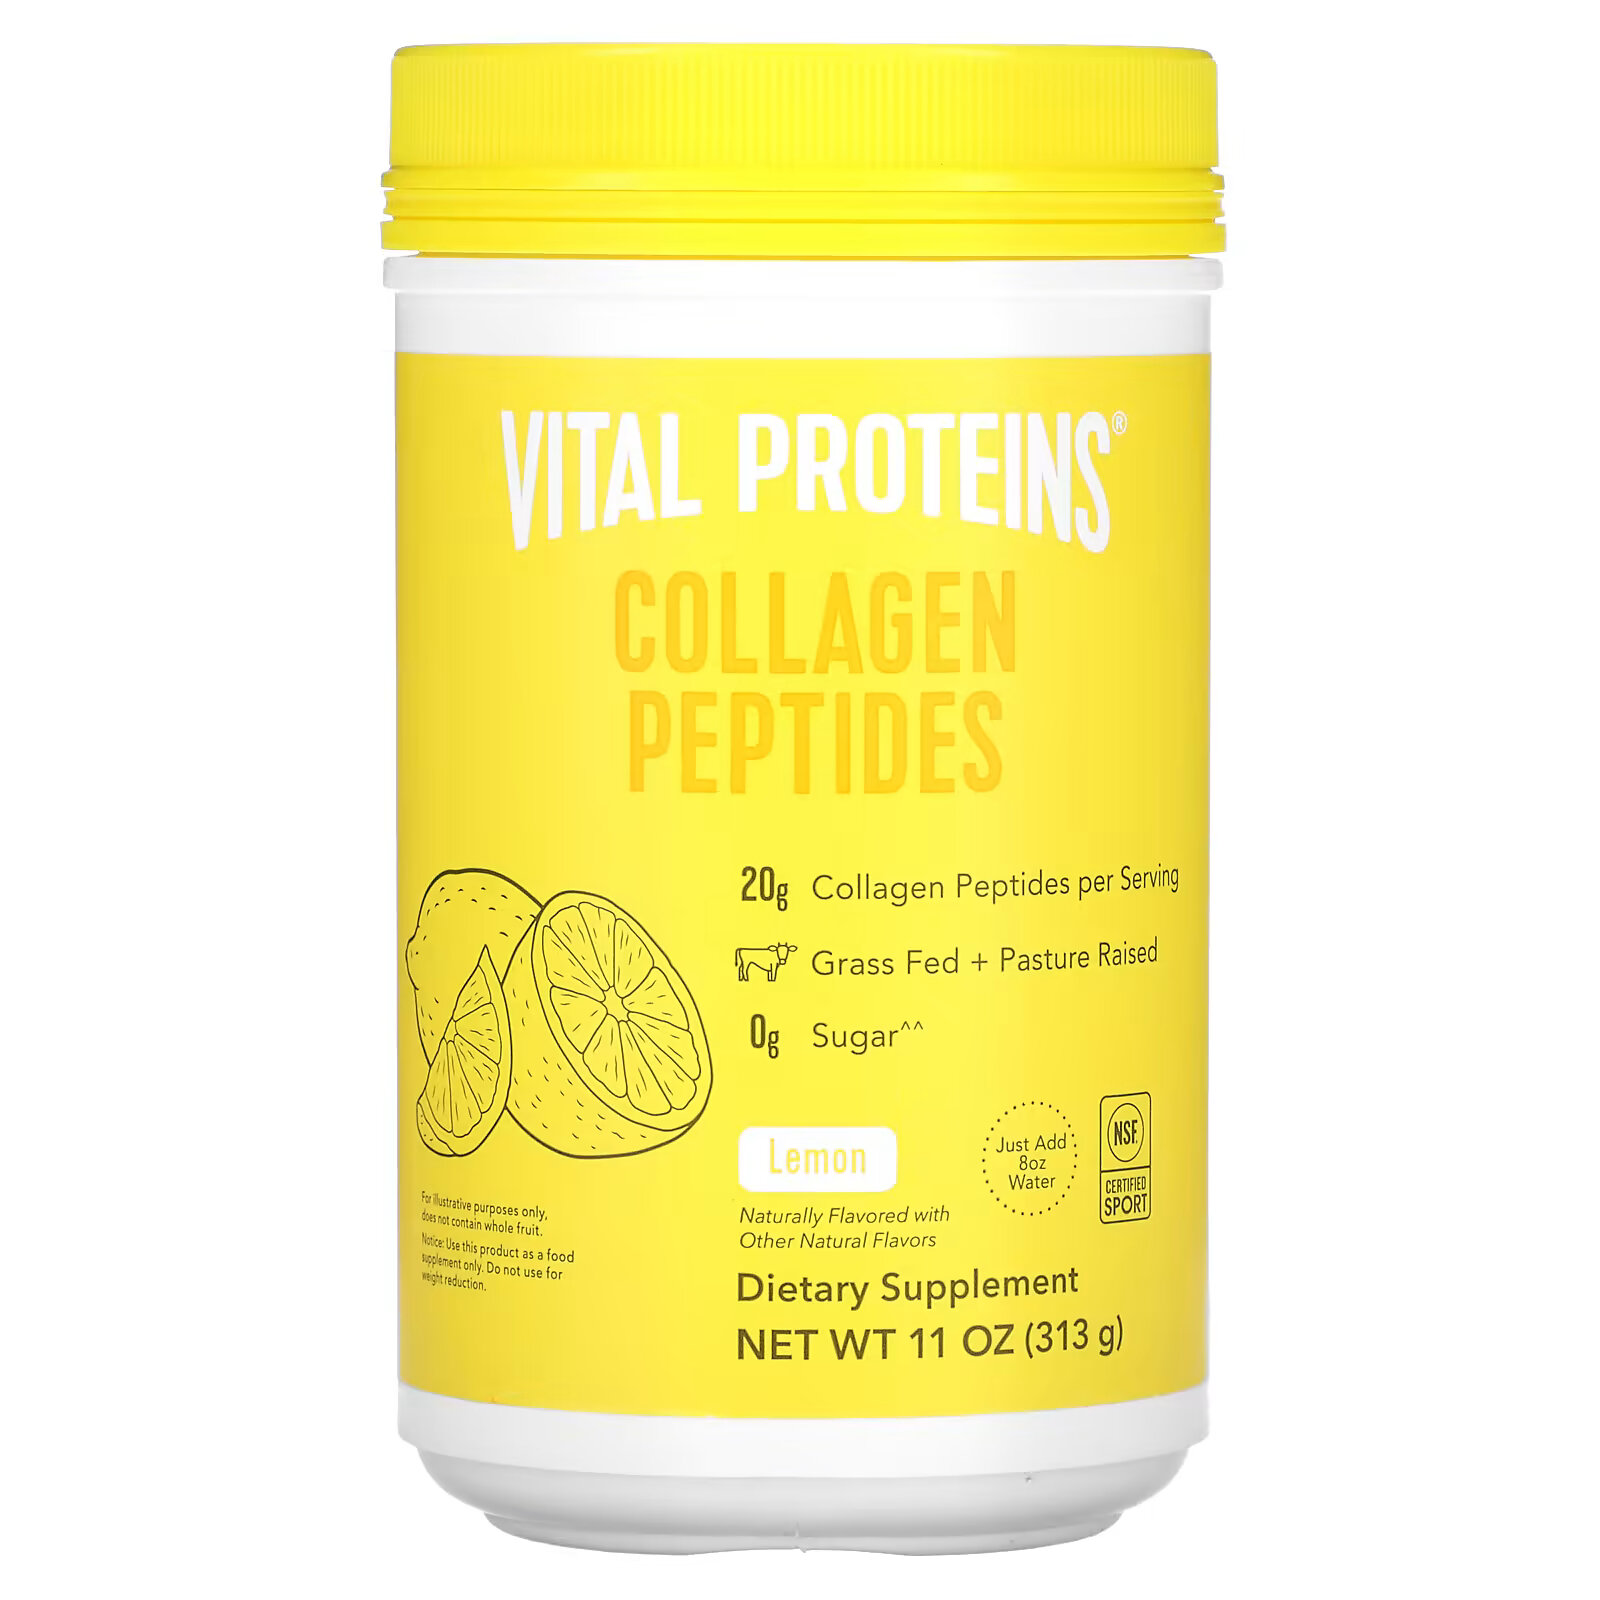 vital proteins пептиды коллагена без ароматизаторов 12 унций 567 г Vital Proteins, Коллагеновые пептиды, лимон, 313 г (11 унций)